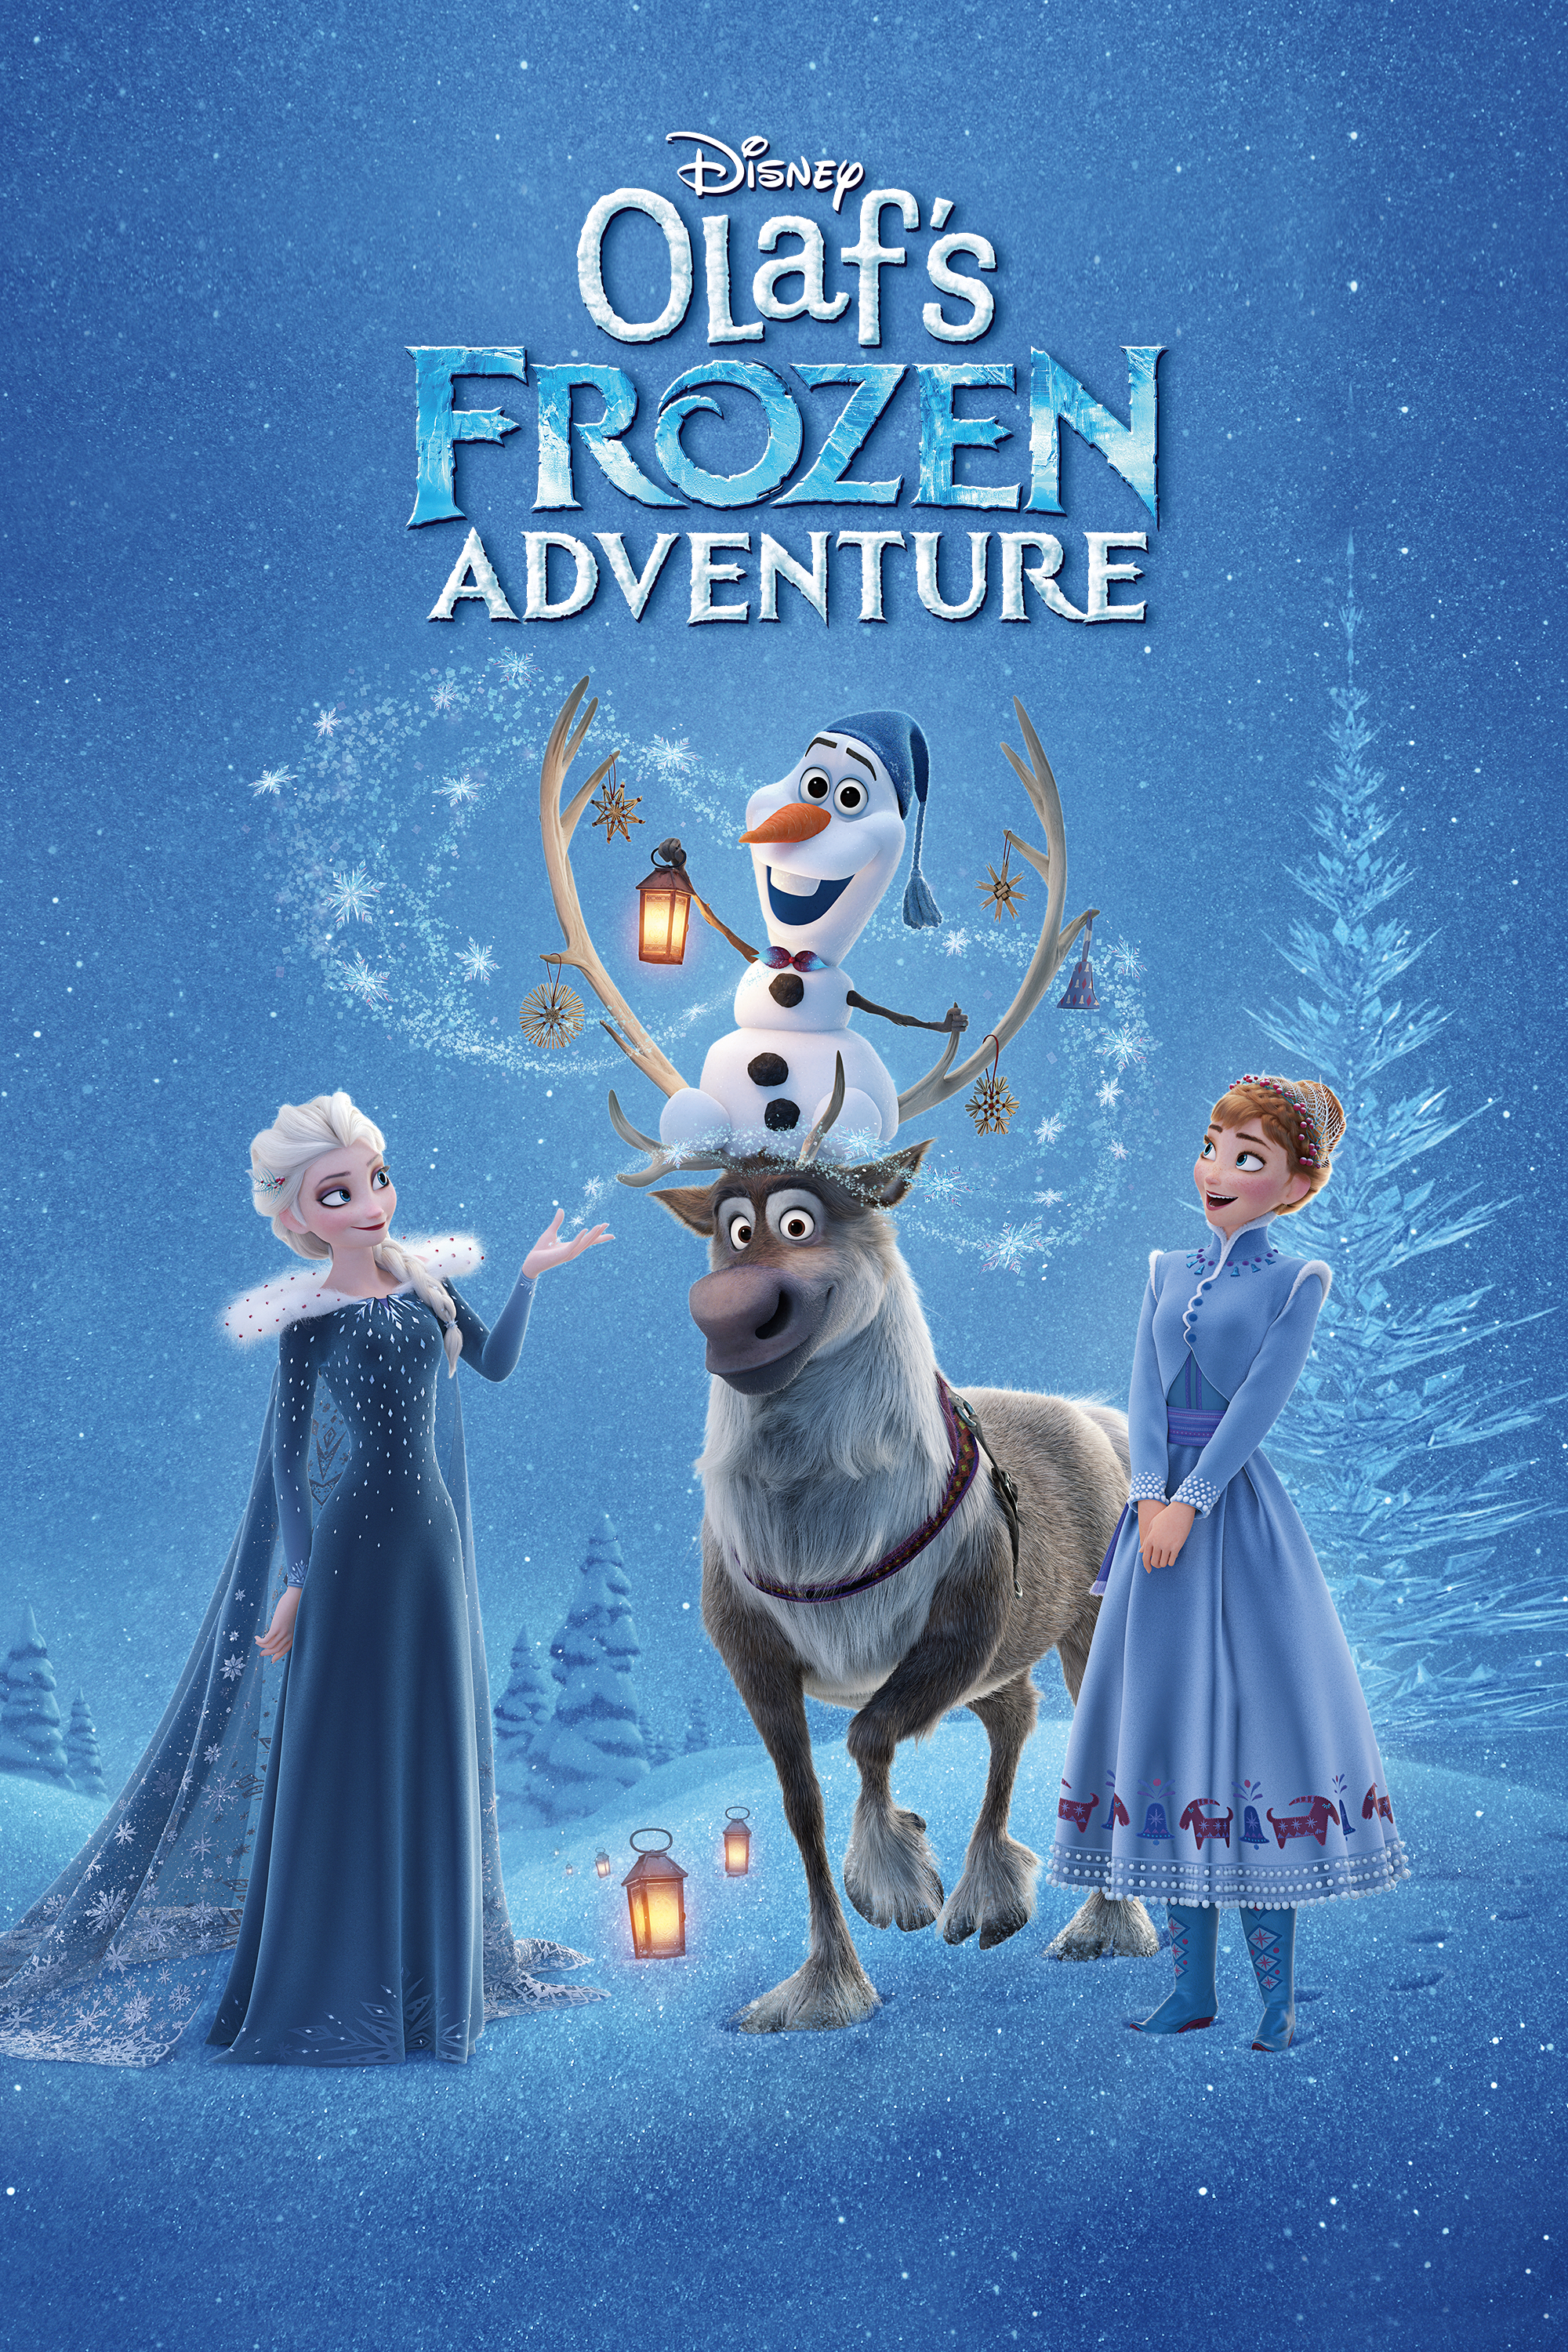 Poster Phim Chuyến Phiêu Lưu Của Olaf (Olaf's Frozen Adventure)